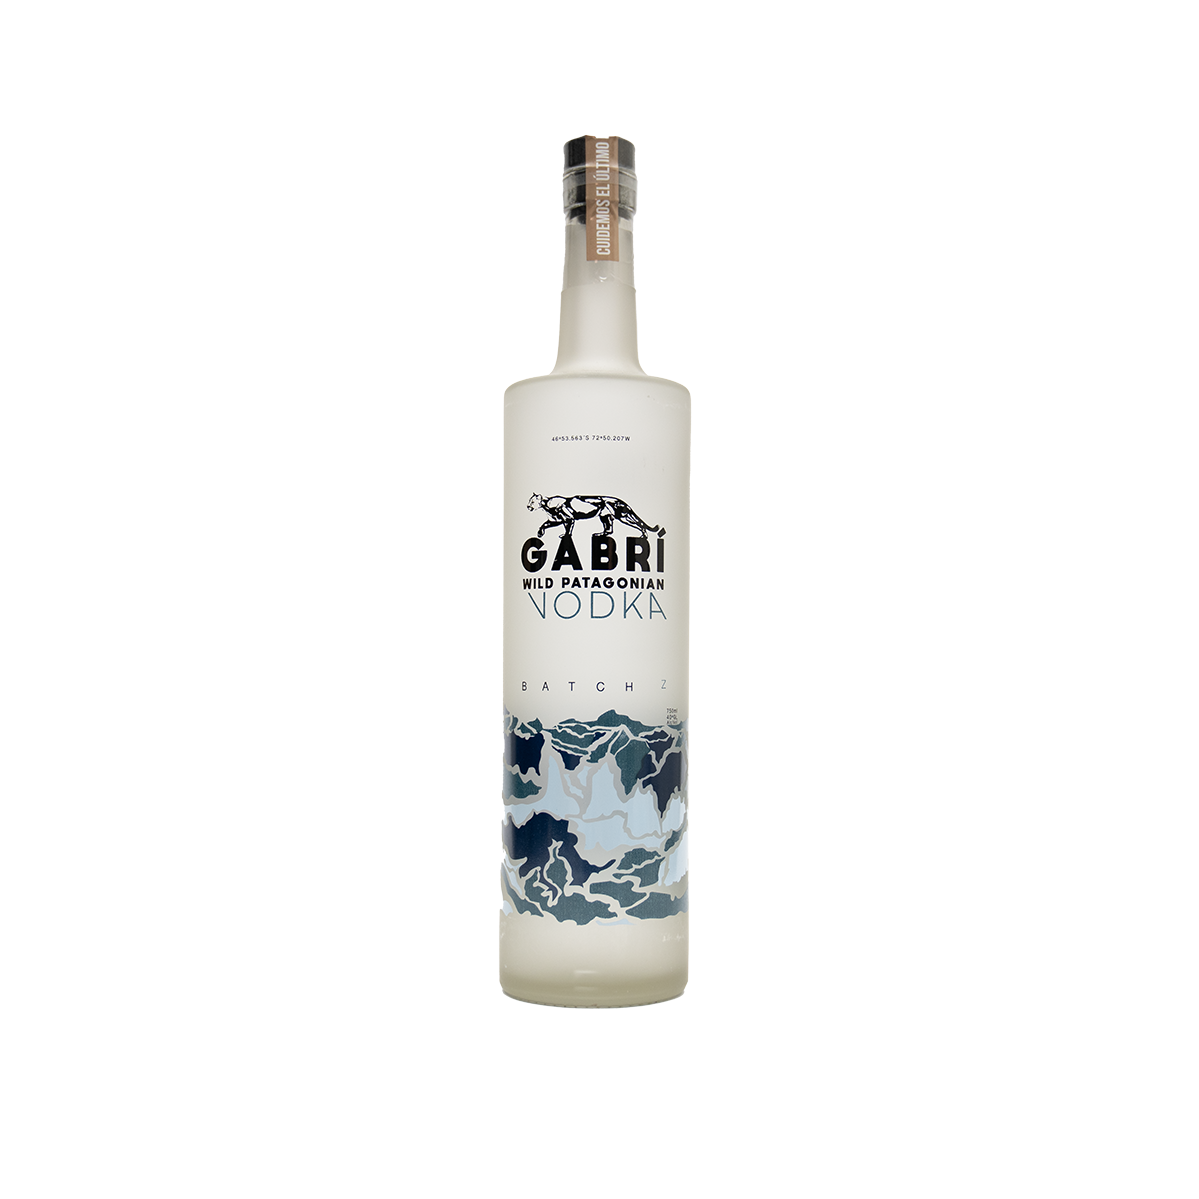 Vodka Gabri Patagonia